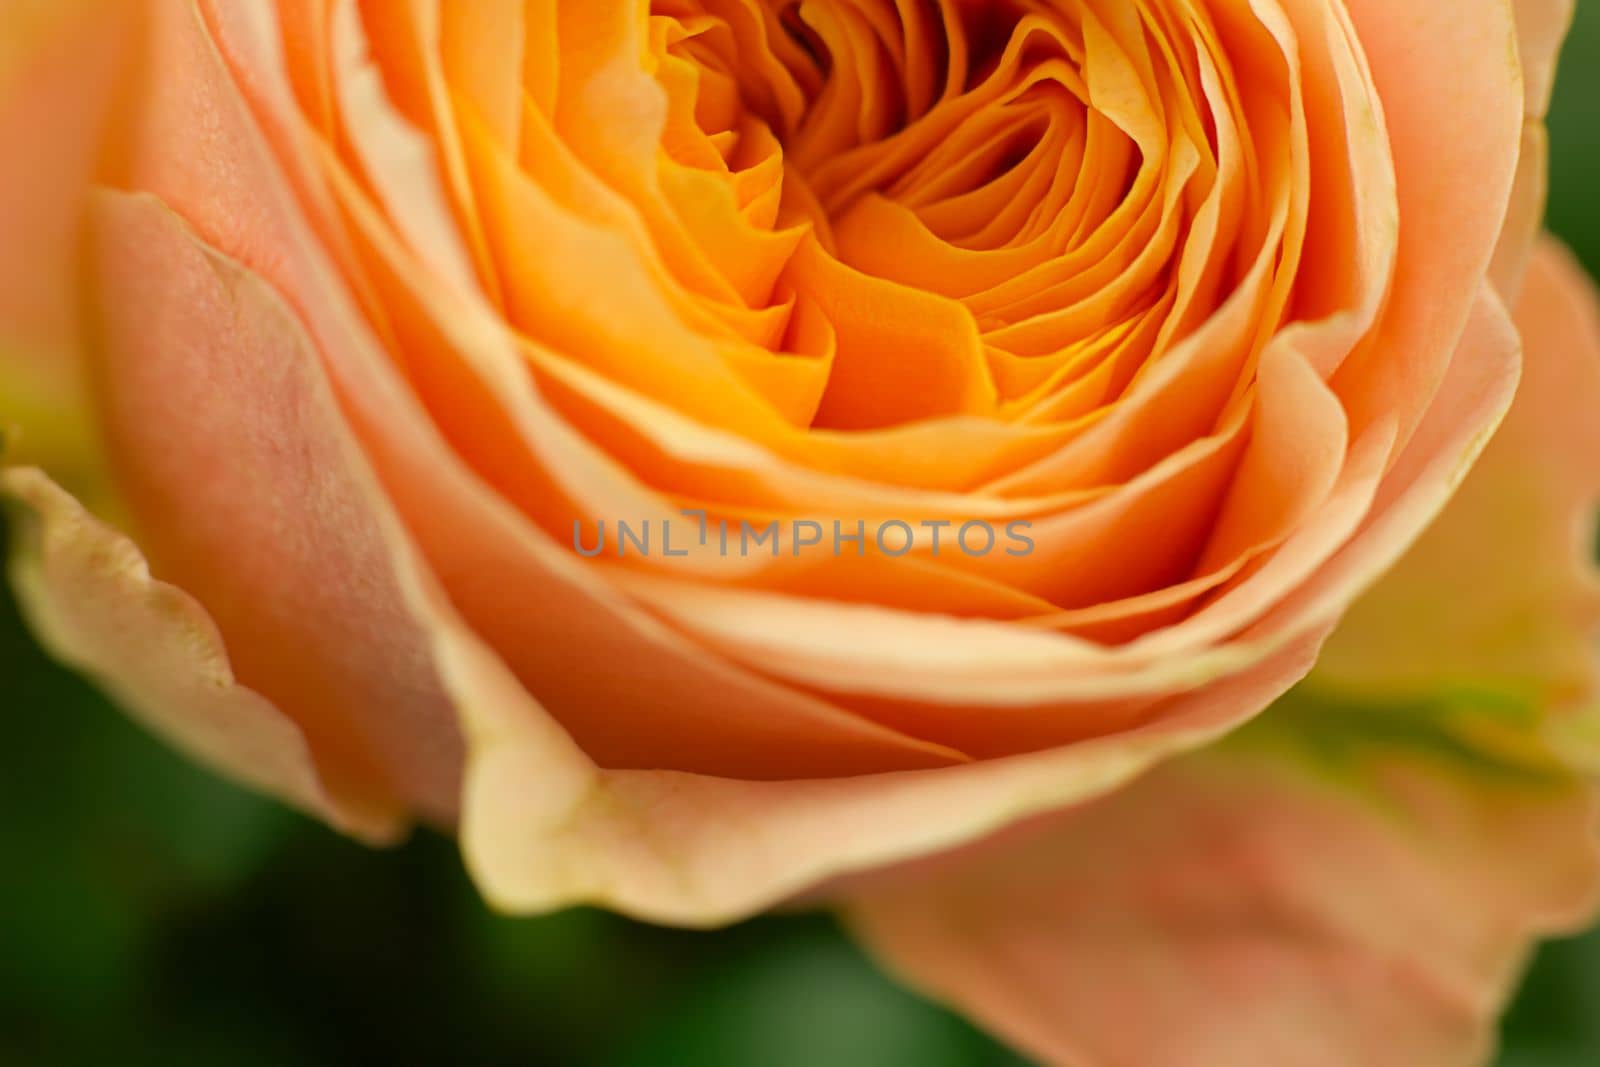 orange rose's bud macro view petals close-up background by Kondrateva